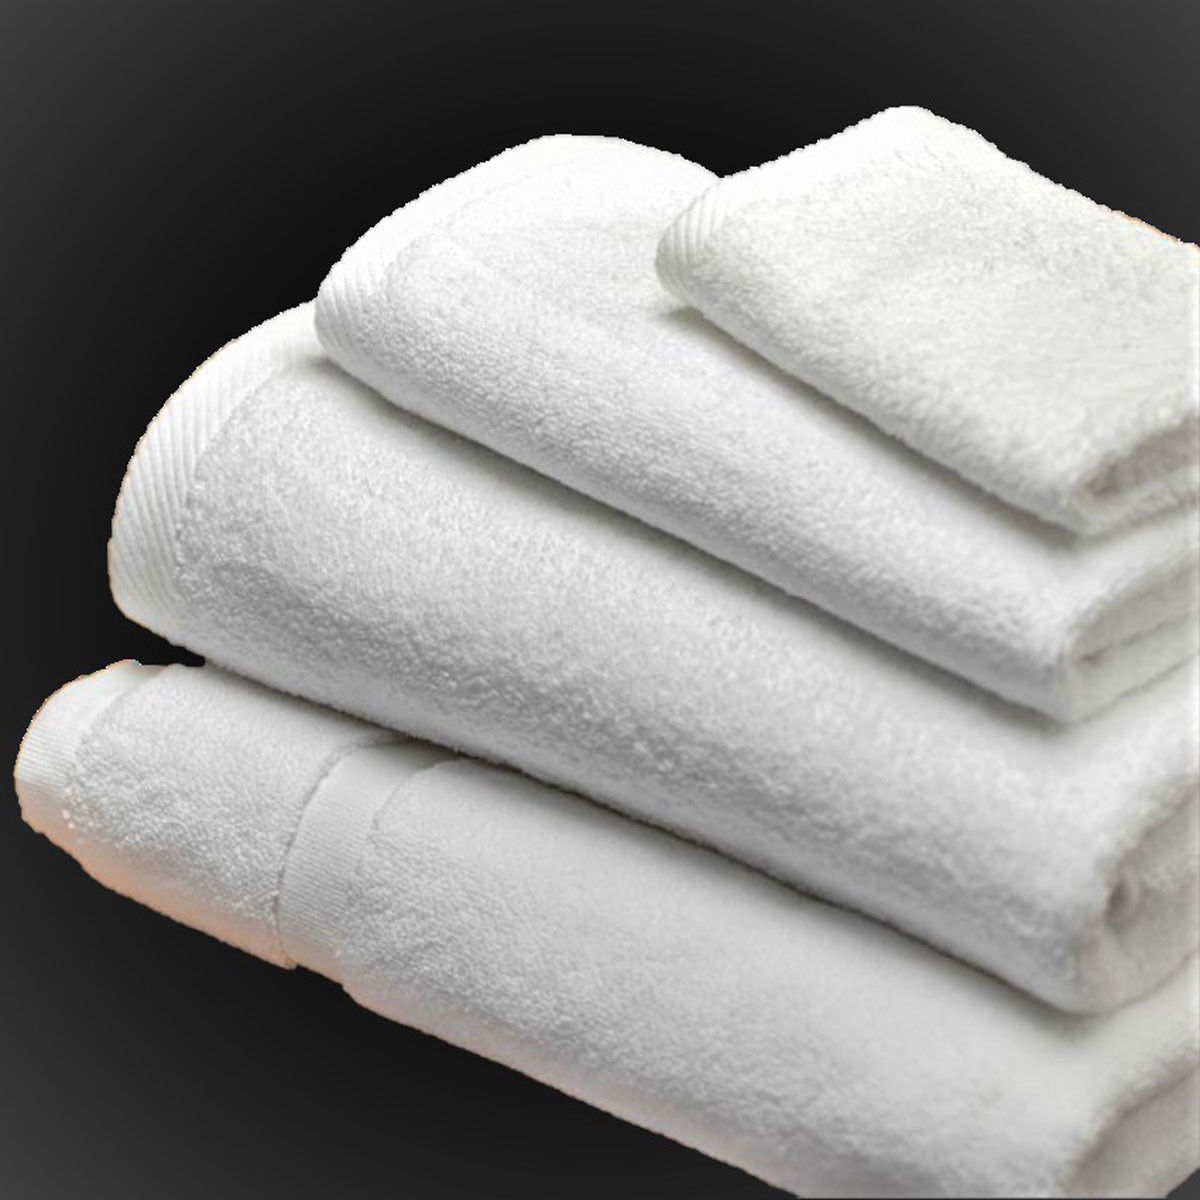 Who makes the bulk bath towels wholesale?